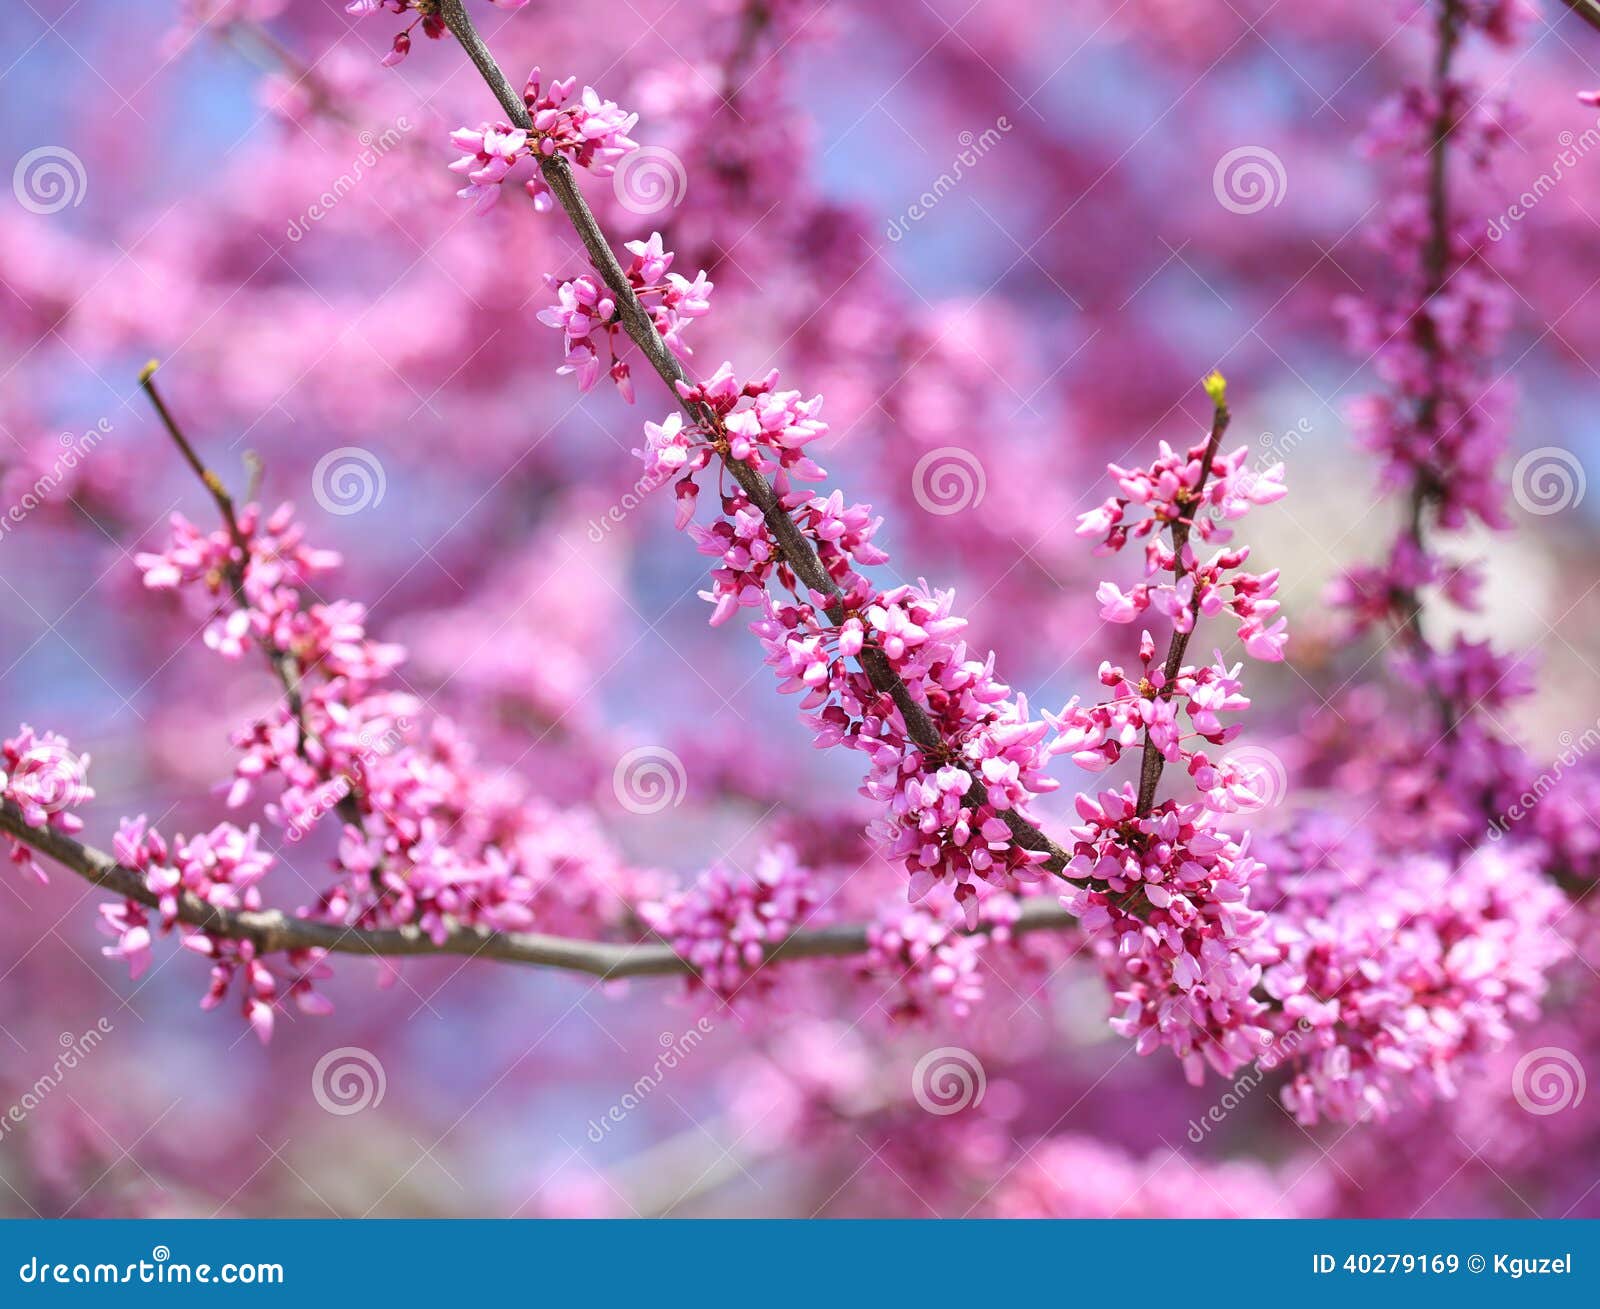 purple spring blossom. cercis canadensis or eastern redbud